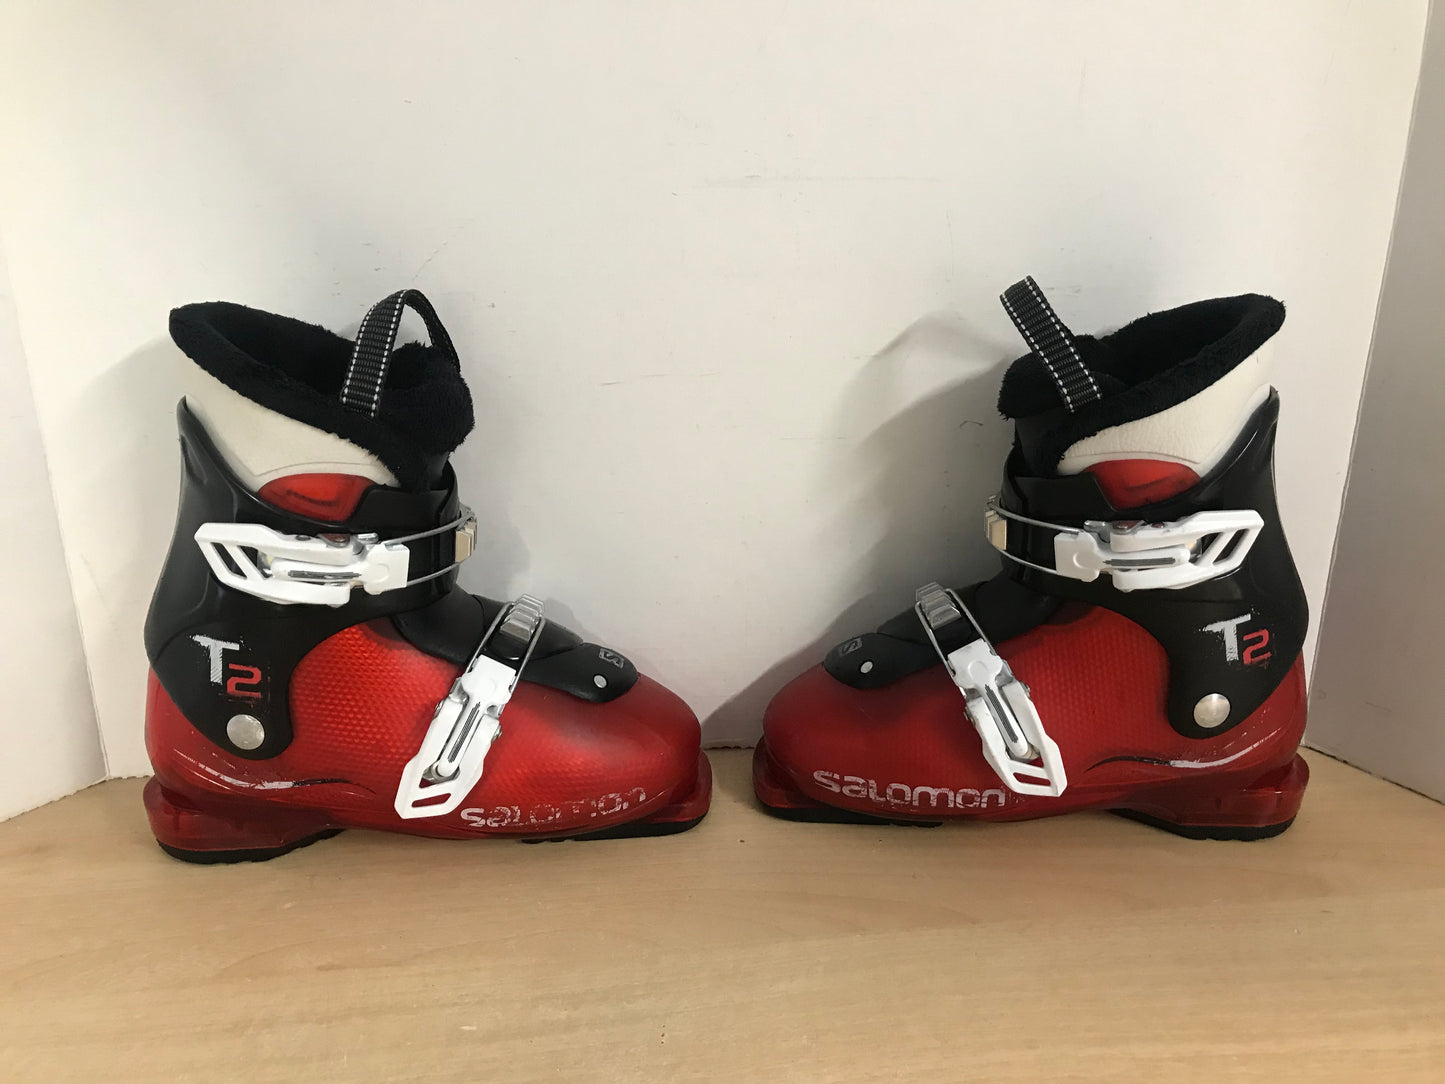 Ski Boots Mondo Size 21.0 Child Size 3-4 Shoe Size 259 mm Salomon Black Red White Excellent